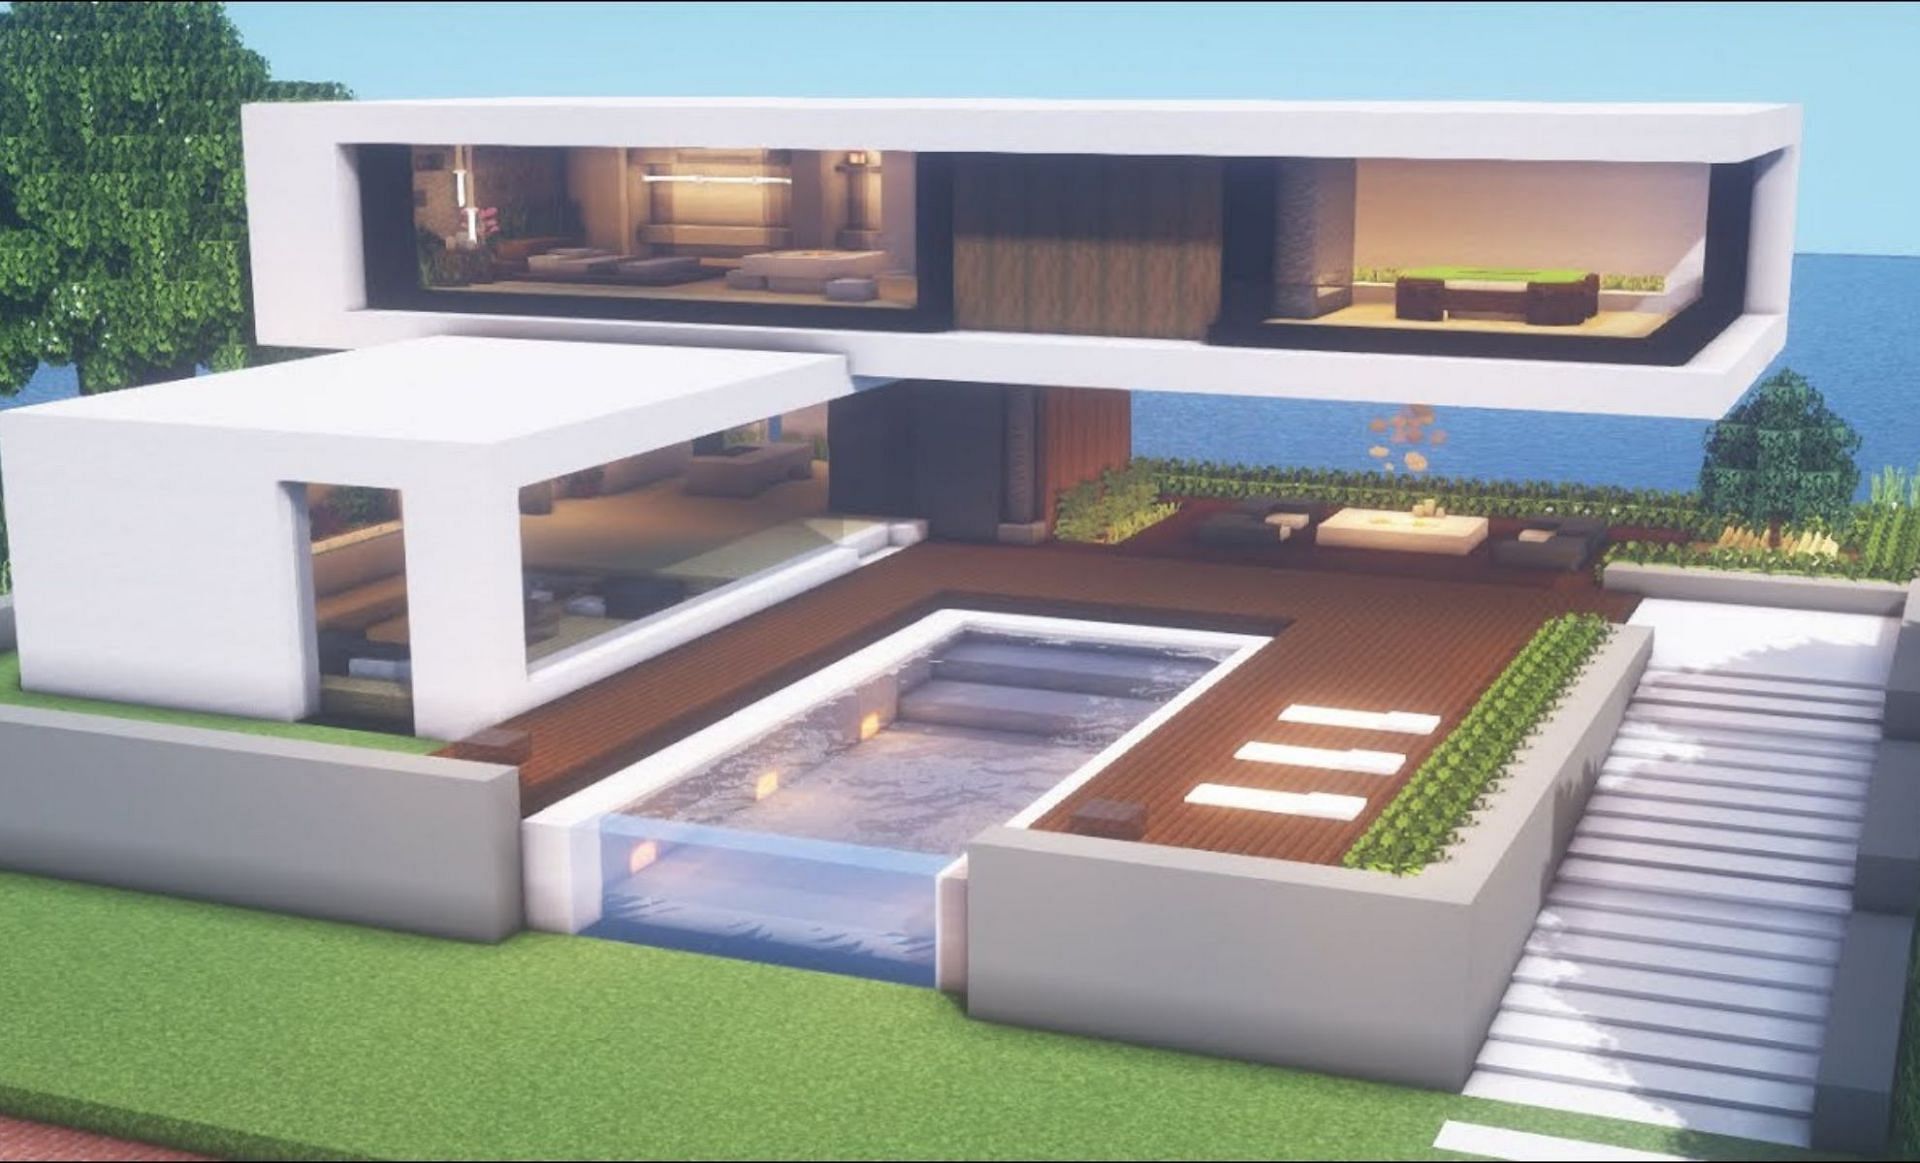 Modern house designs can vary (Image via JINTUBE/YouTube)